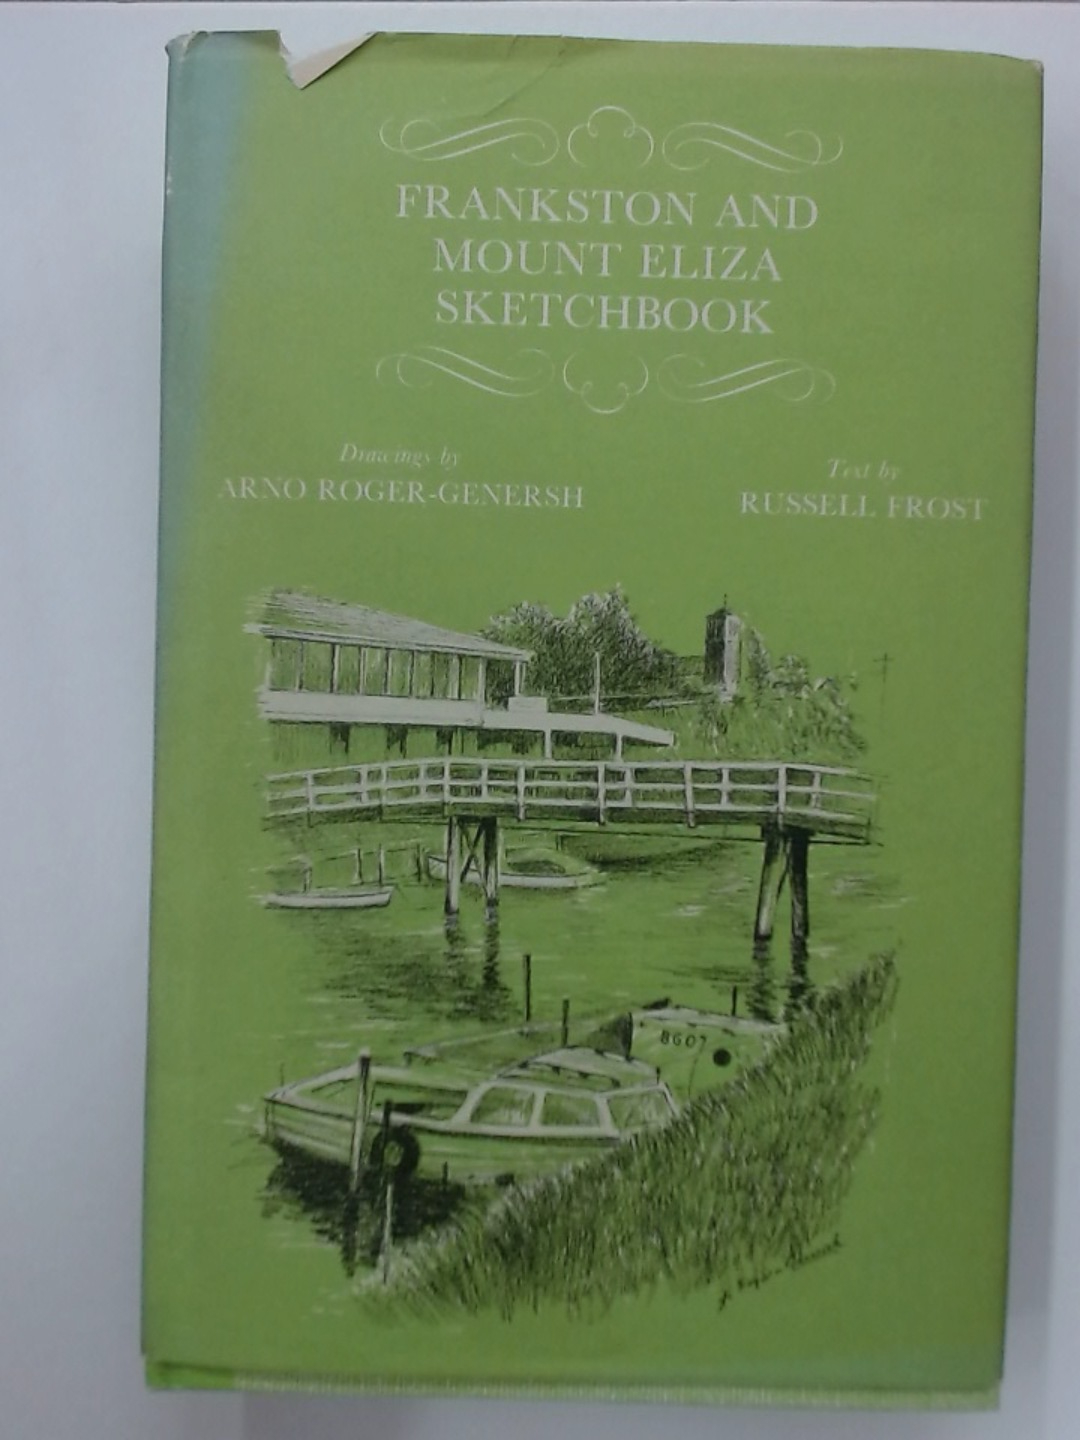 Frankston and Mount Eliza Sketchbook.